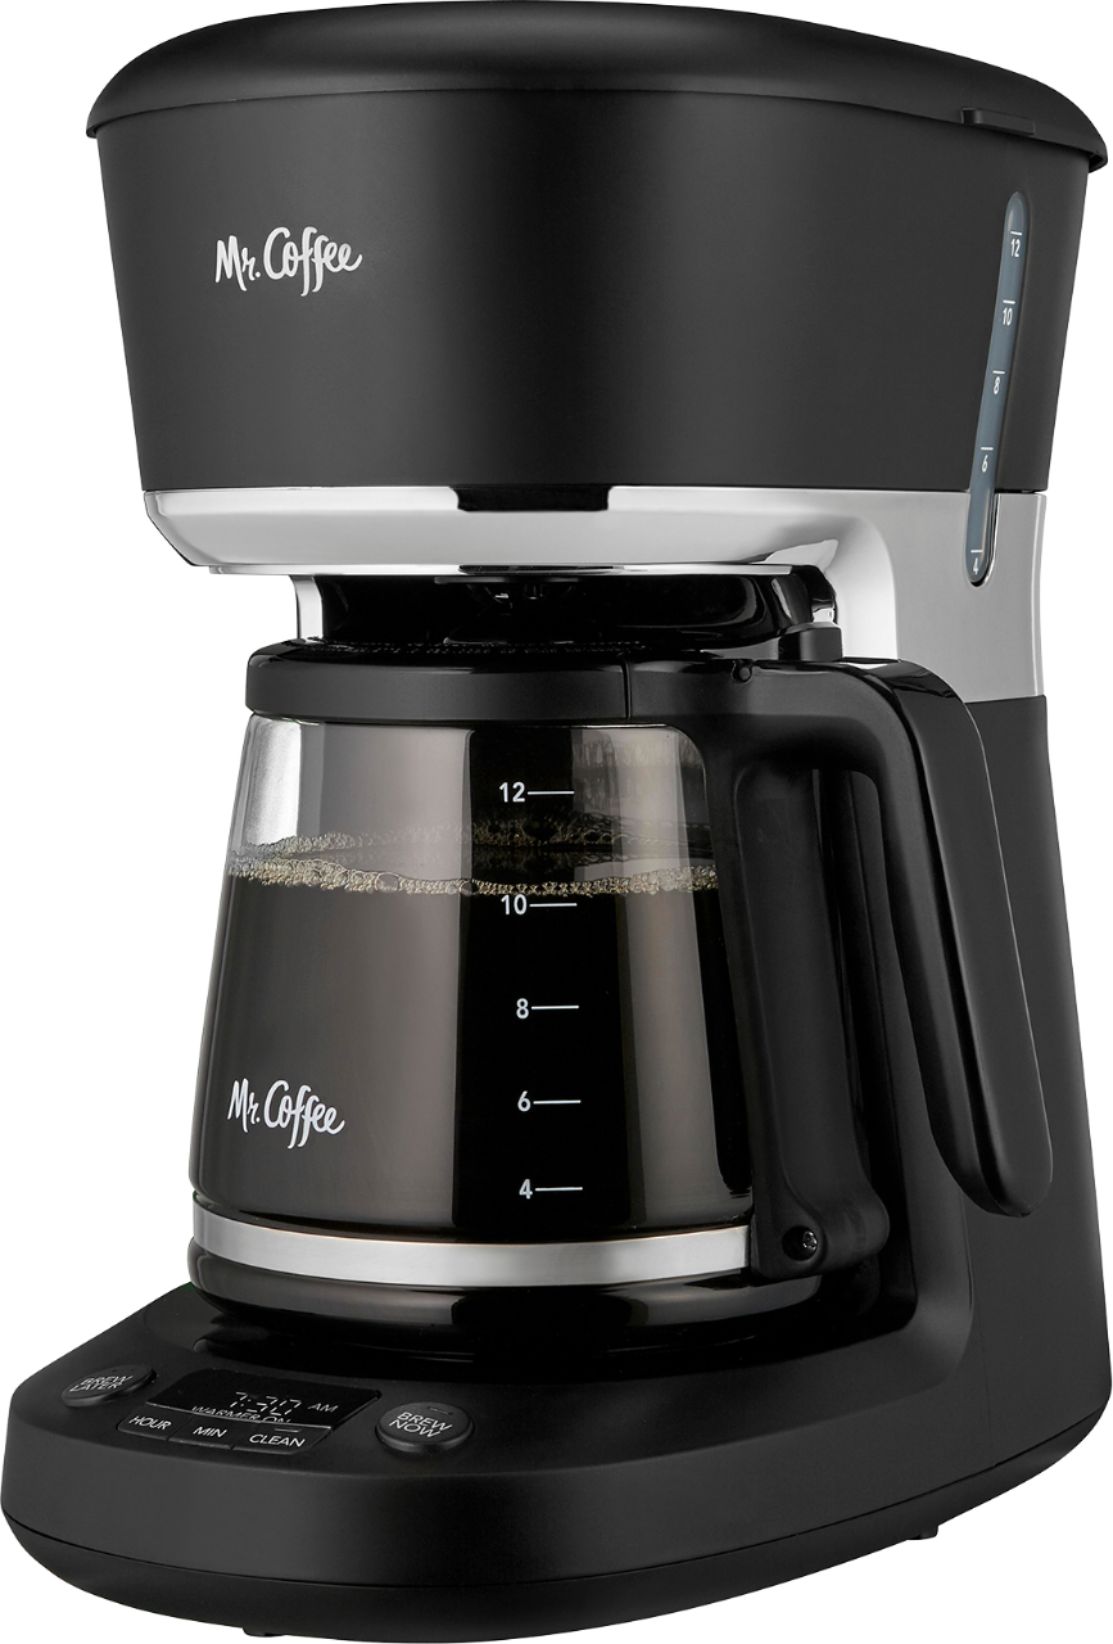 Coffee Maker Mr Coffee Simple Brew 4 Cup Coffee Machine Drip Coffee Maker Black